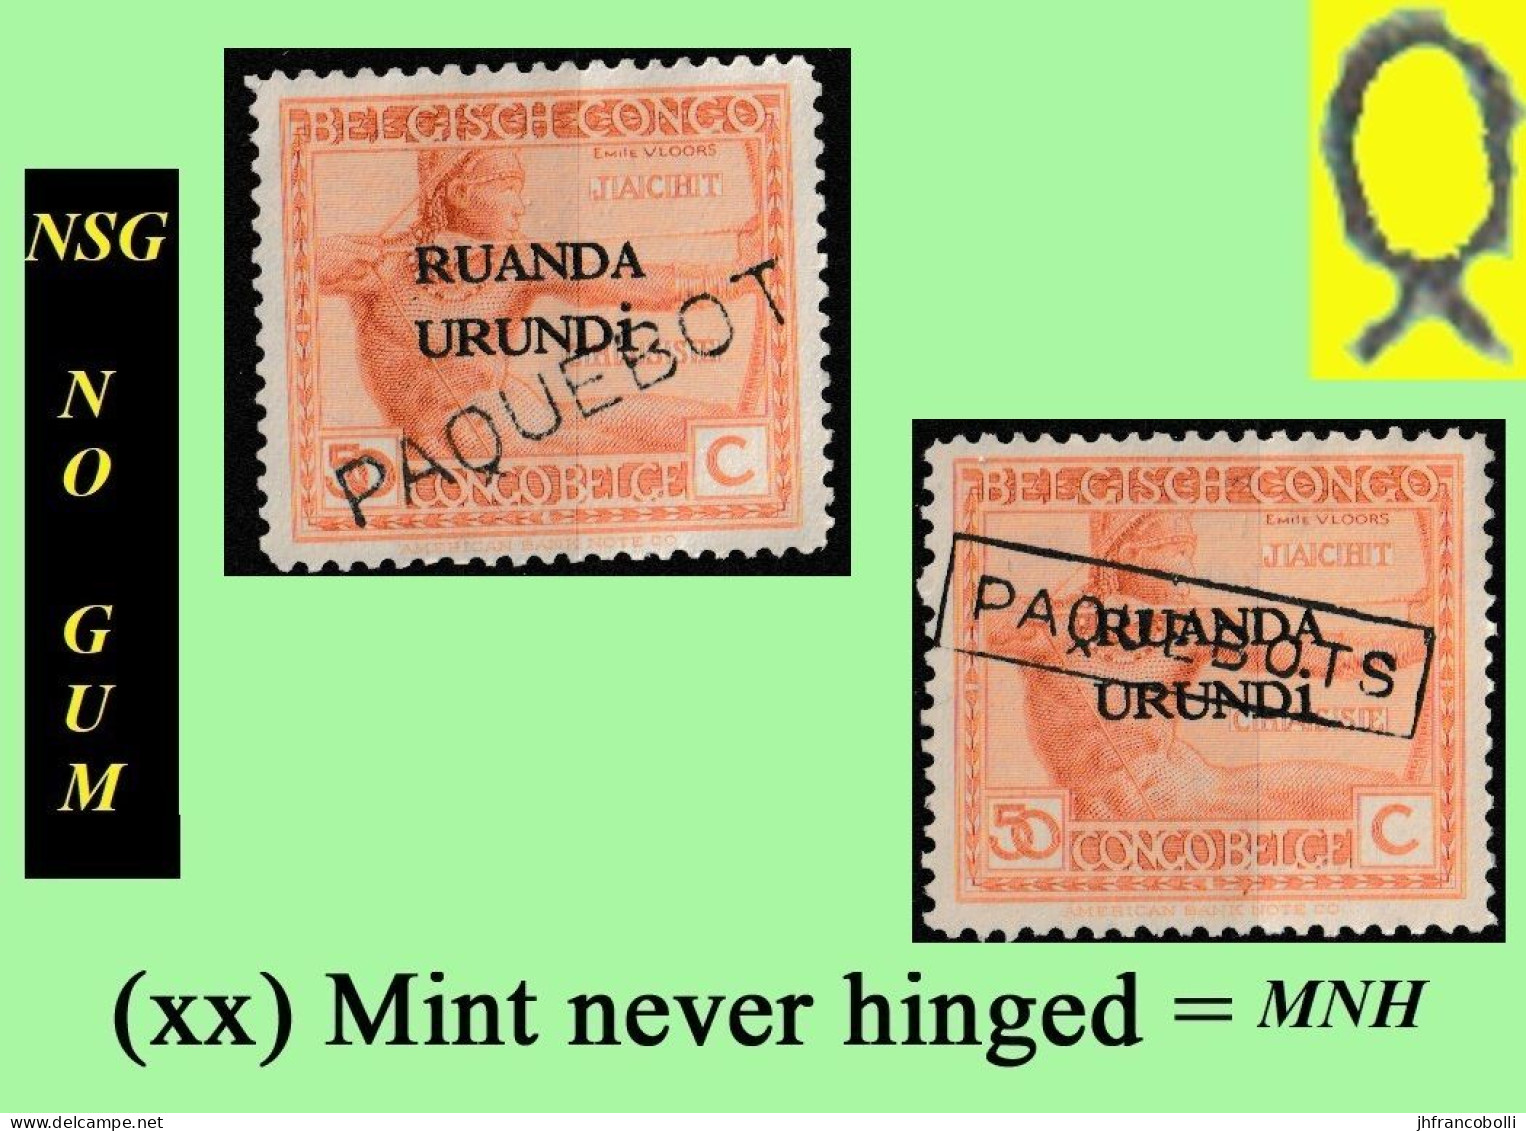 1925 ** RUANDA-URUNDI RU/MNH RU 067 PAQUEBOT ( SINGULAR+PLURAL) VLOORS 2 [B] ( X 2 Stamps ) NO GUM + ONLY 1 WITH A FRAME - Ongebruikt